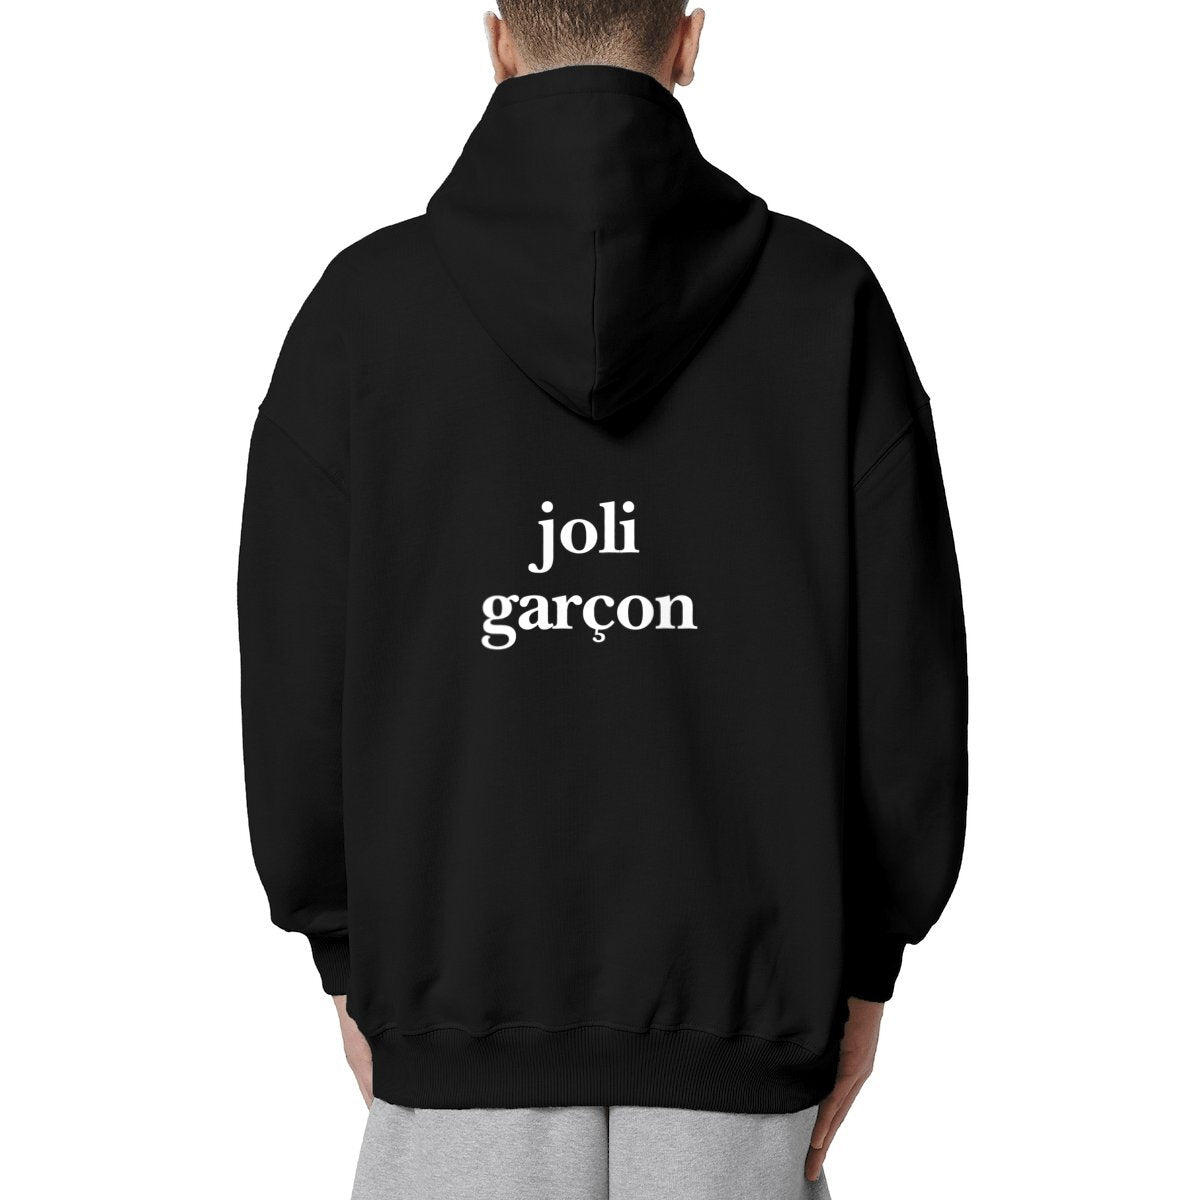 joli garçon hoodie over. garçon garçon essentiel black oversized hoodie. Encapsulate effortless Parisian cool with this hoodie, its subtle 'joli garçon ON THE BACK' emblem whispering understated sophistication. Crafted for comfort, styled for streets of Paris.